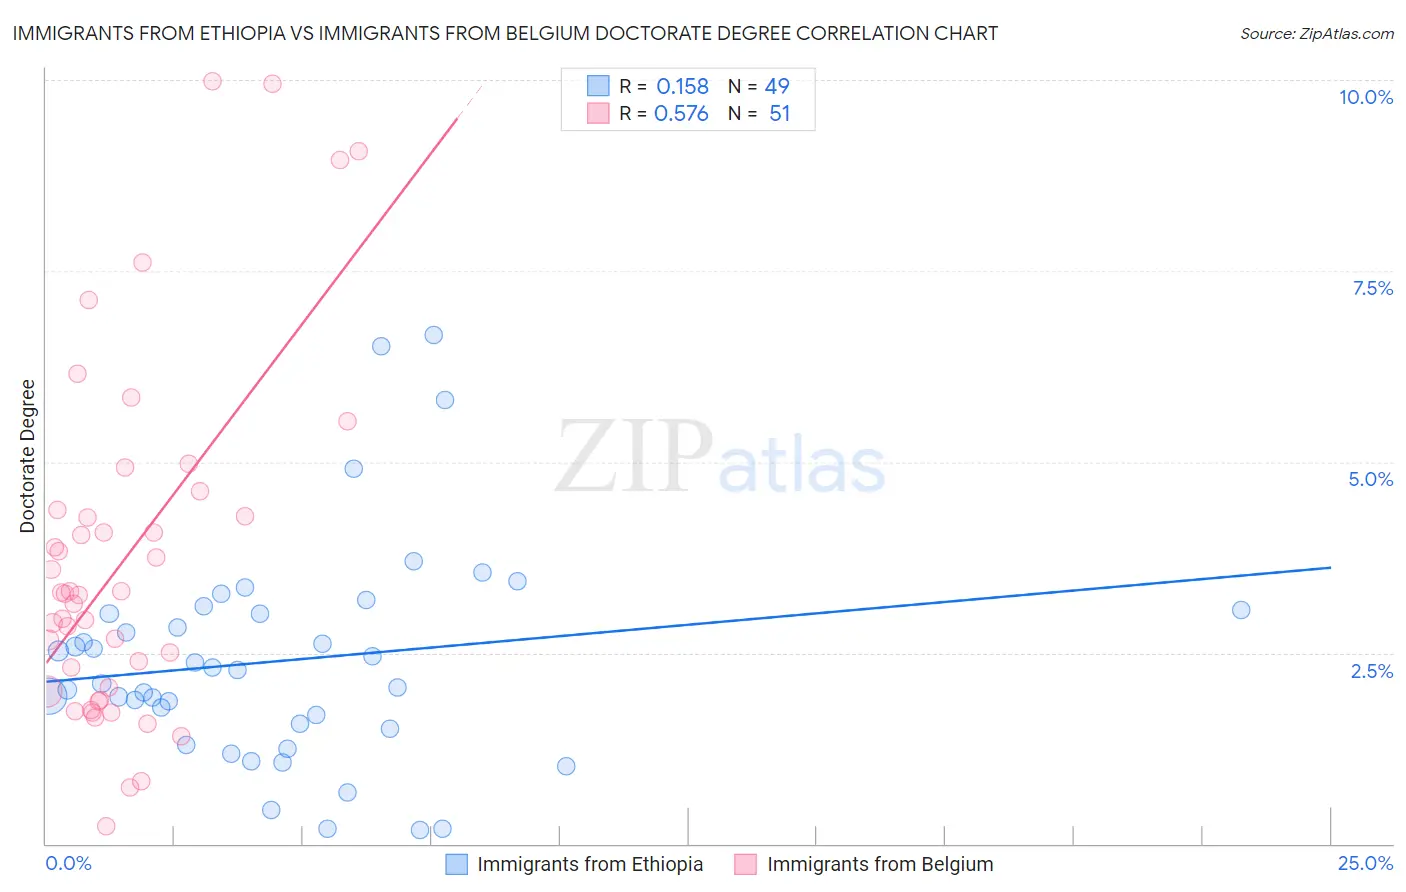 Immigrants from Ethiopia vs Immigrants from Belgium Doctorate Degree